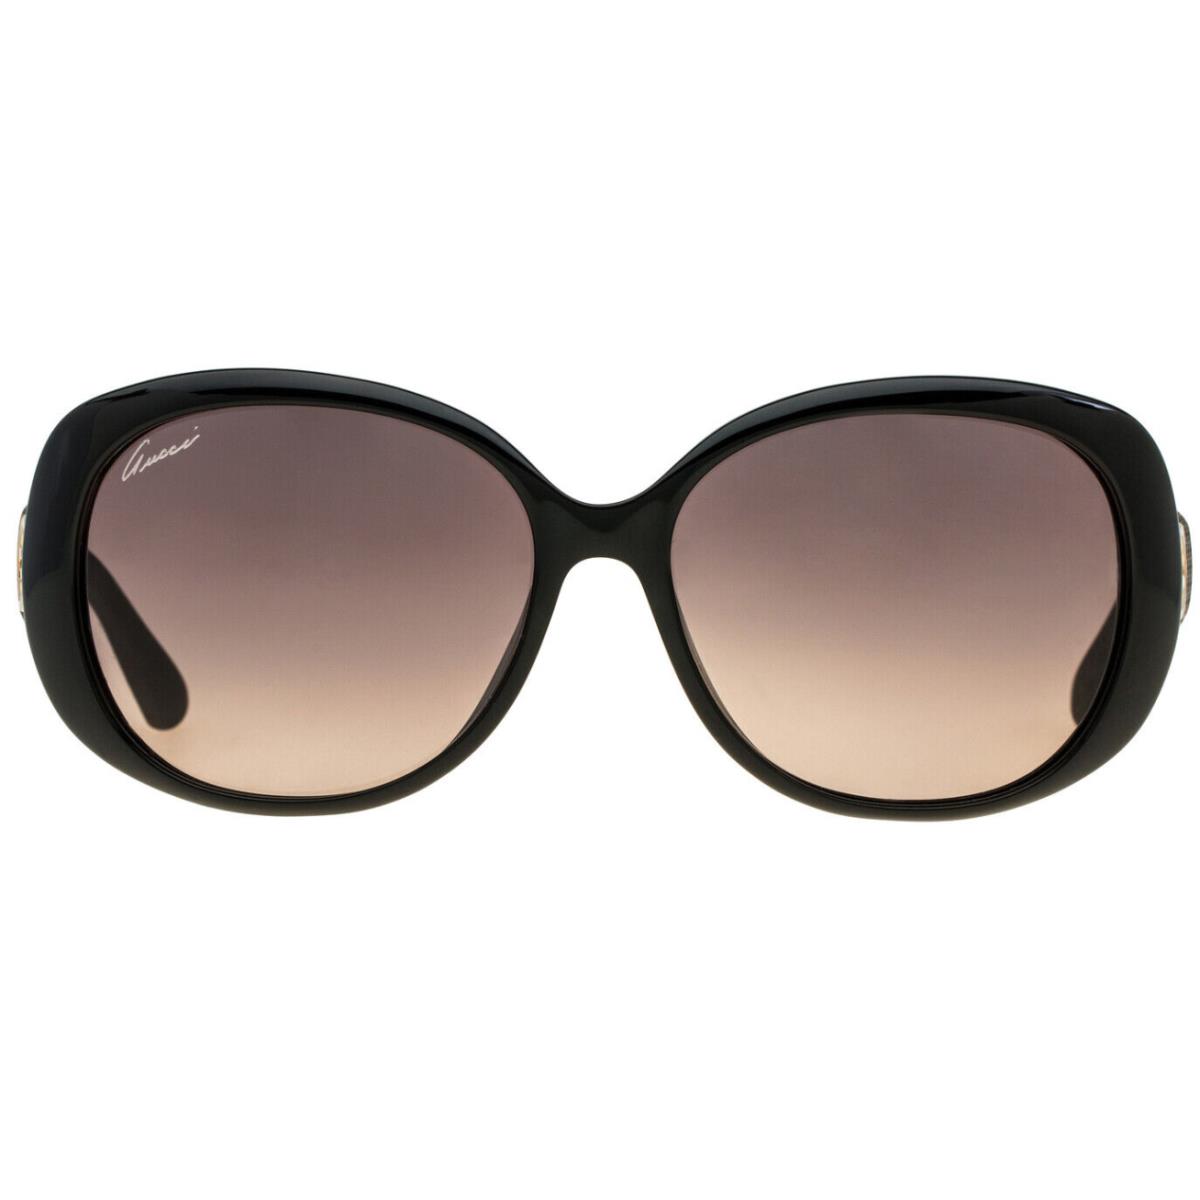 Gucci Women`s Matte Black / Dark Gray Gradient Sunglasses - Frame: Black, Lens: Dark Gray